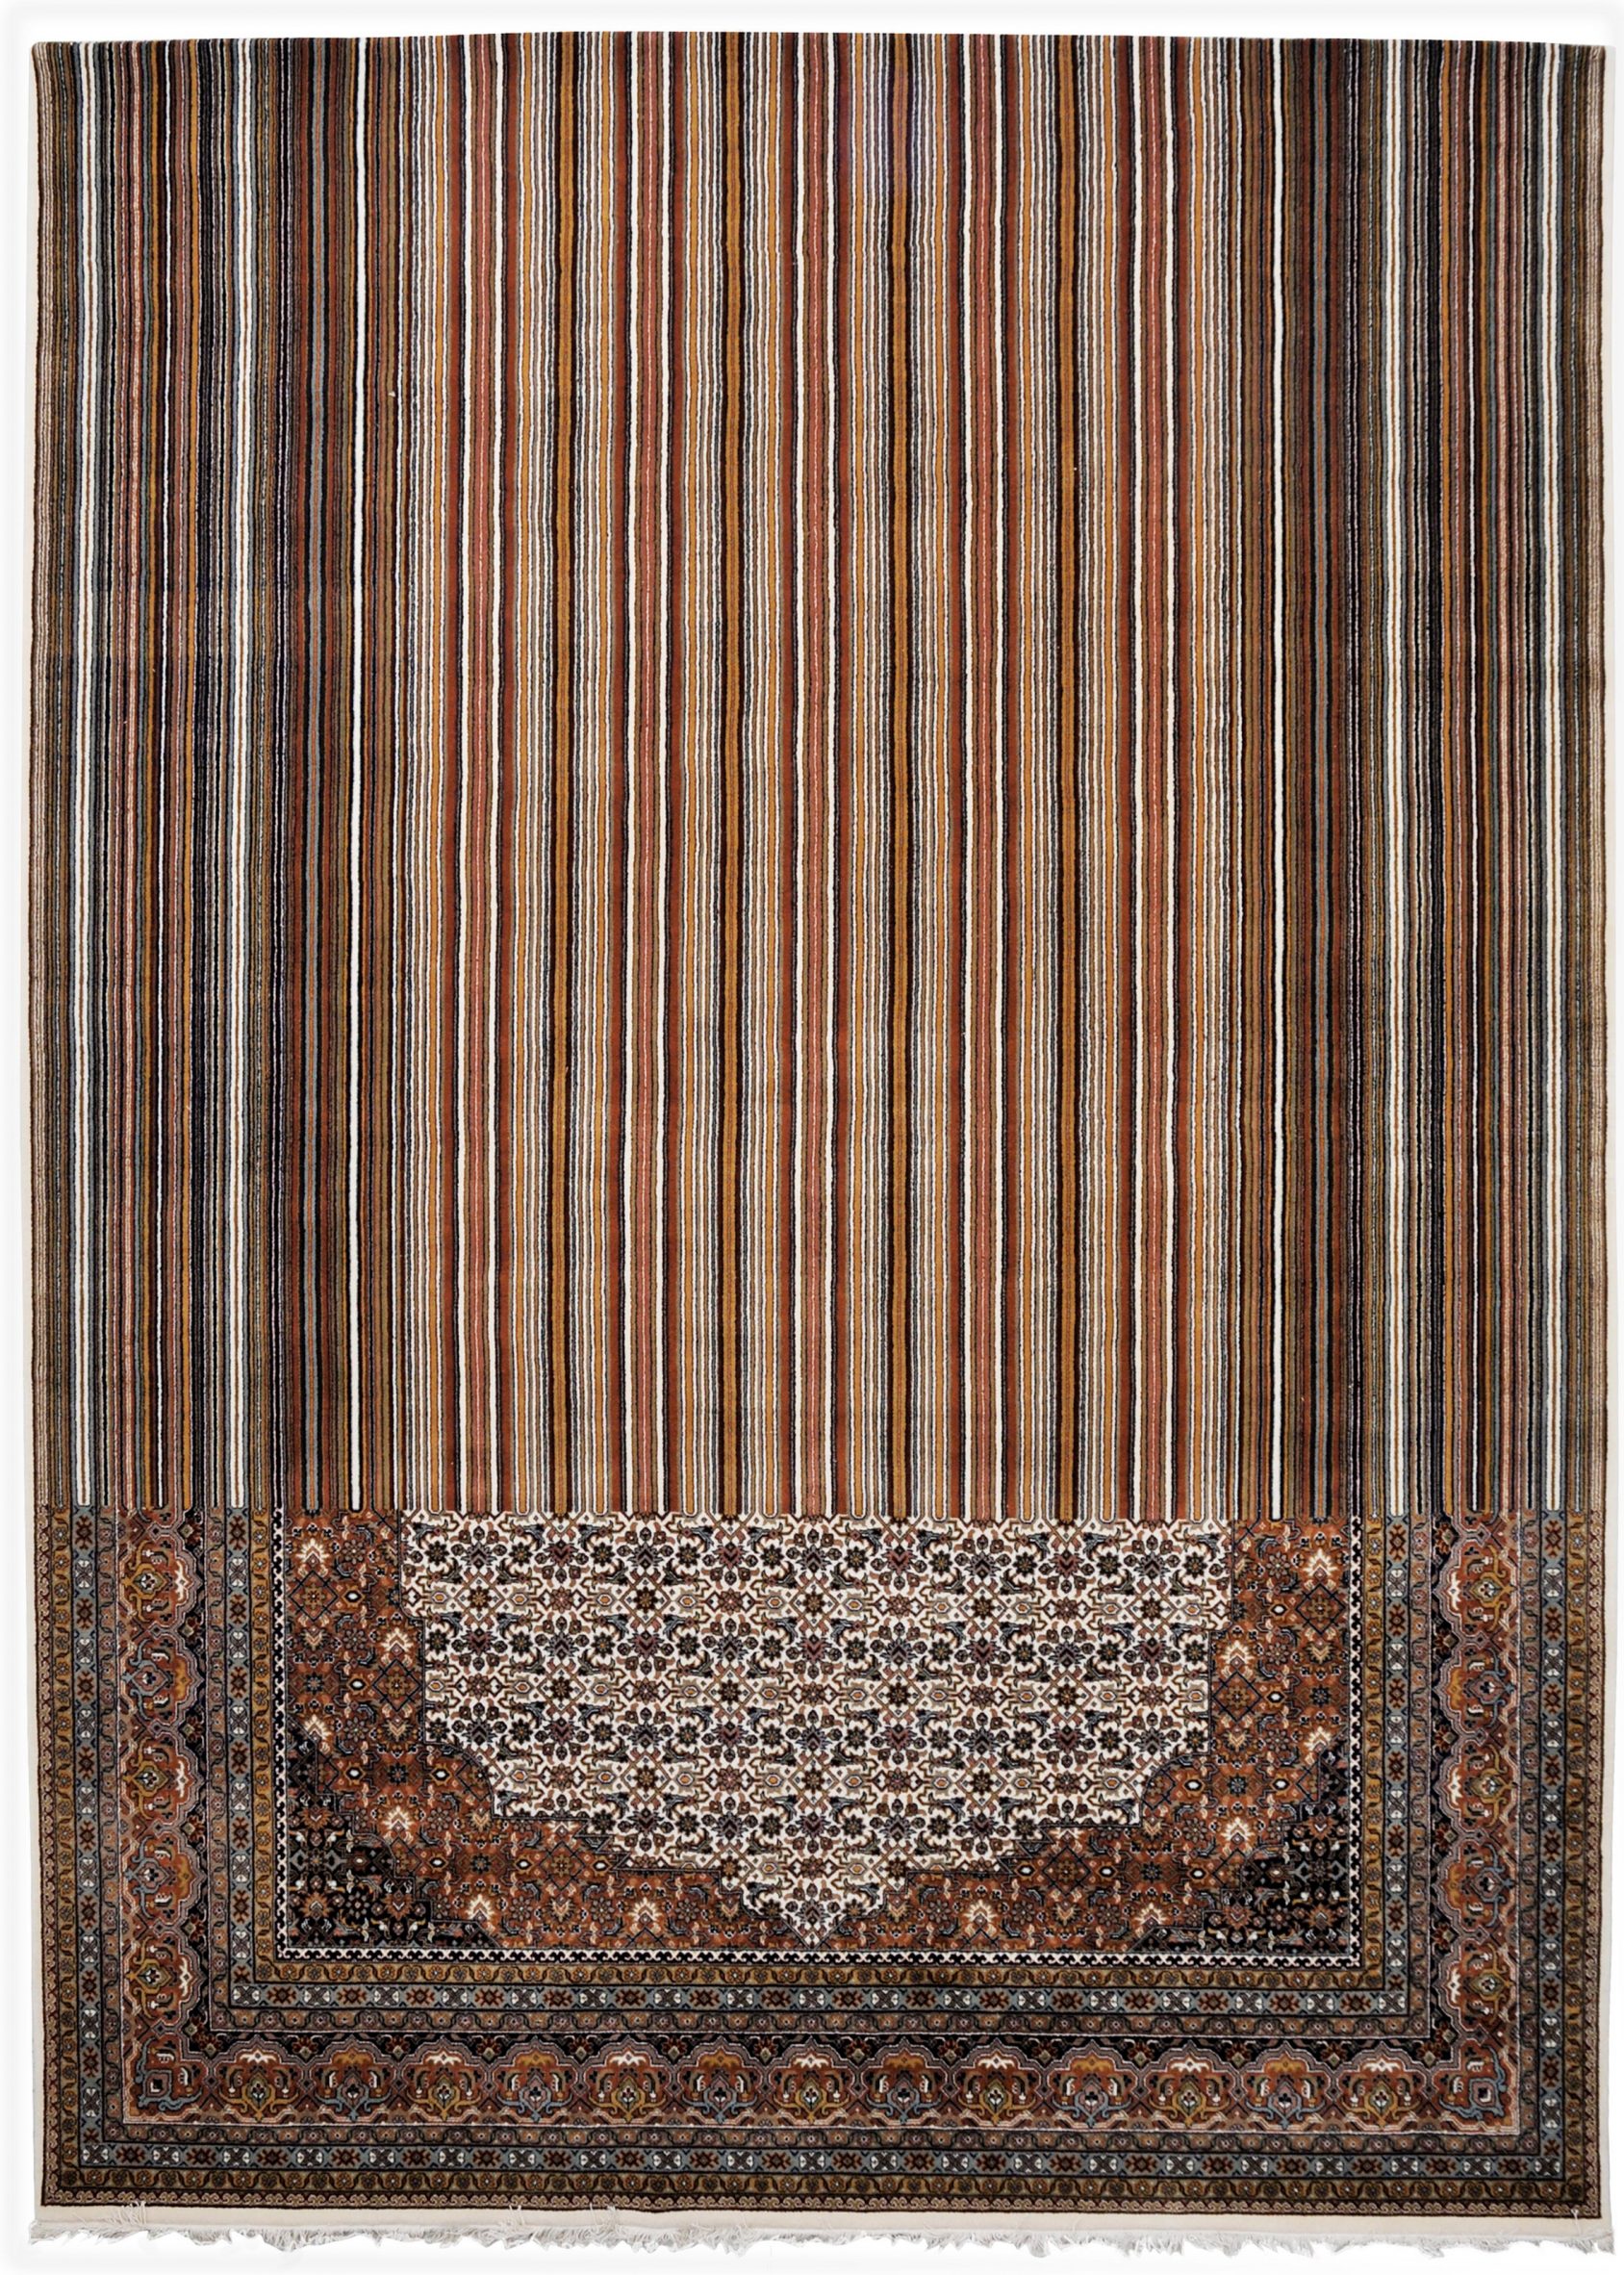 Installation of a rug